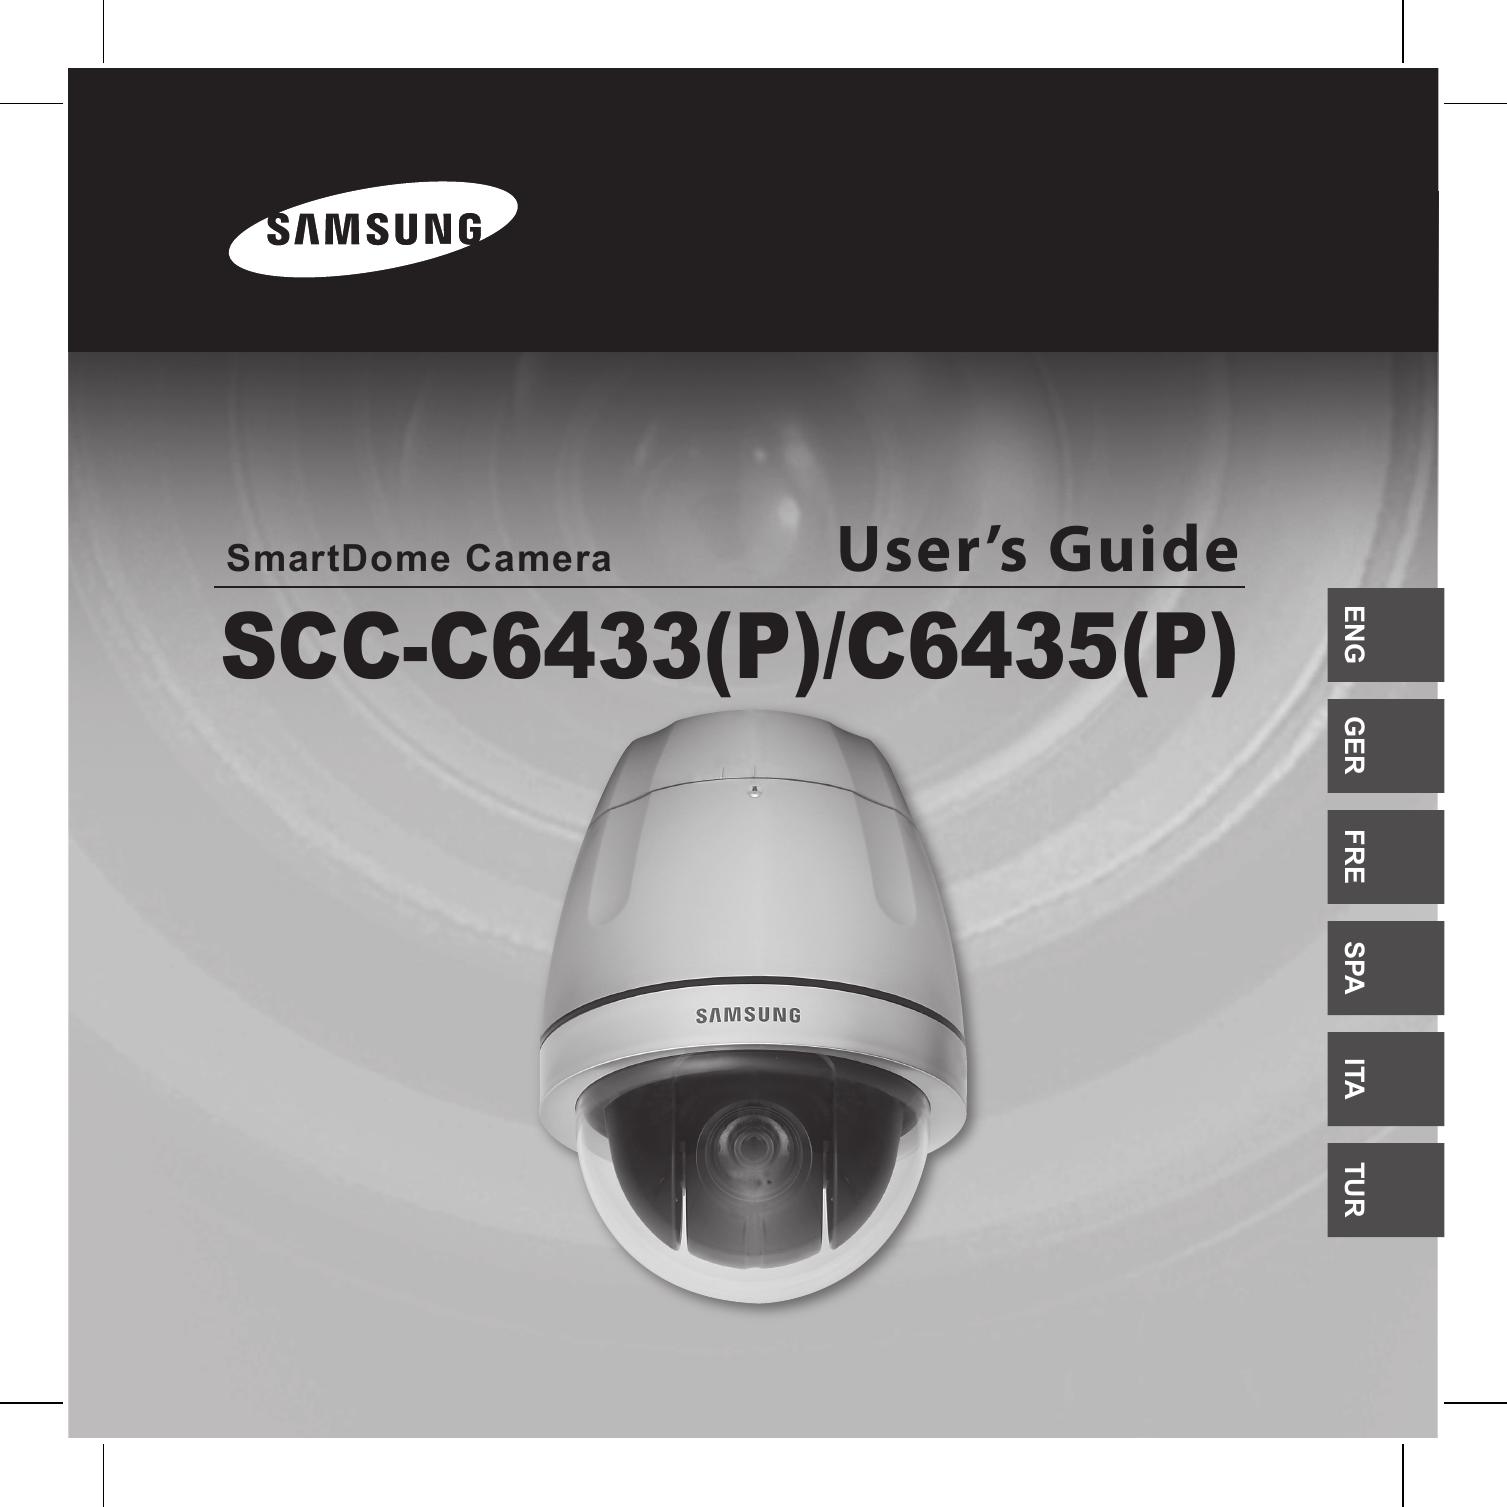 Samsung C6435(P) Security Camera User Manual